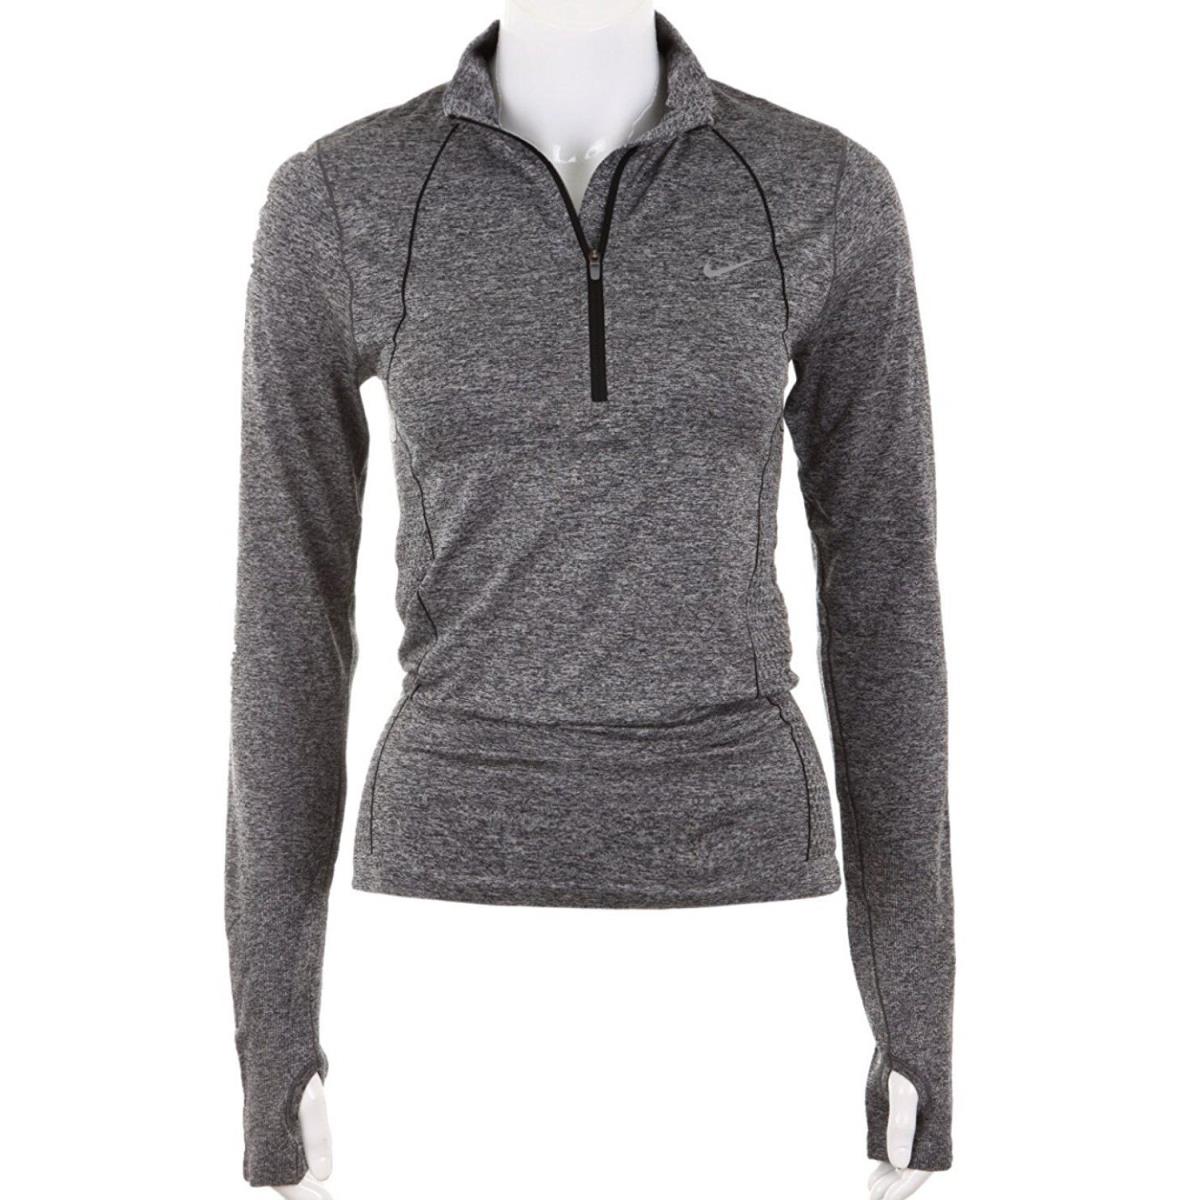 Nike Womens Athletic Shirt Knit Long Sleeve - XL 588534-032 Grey/black